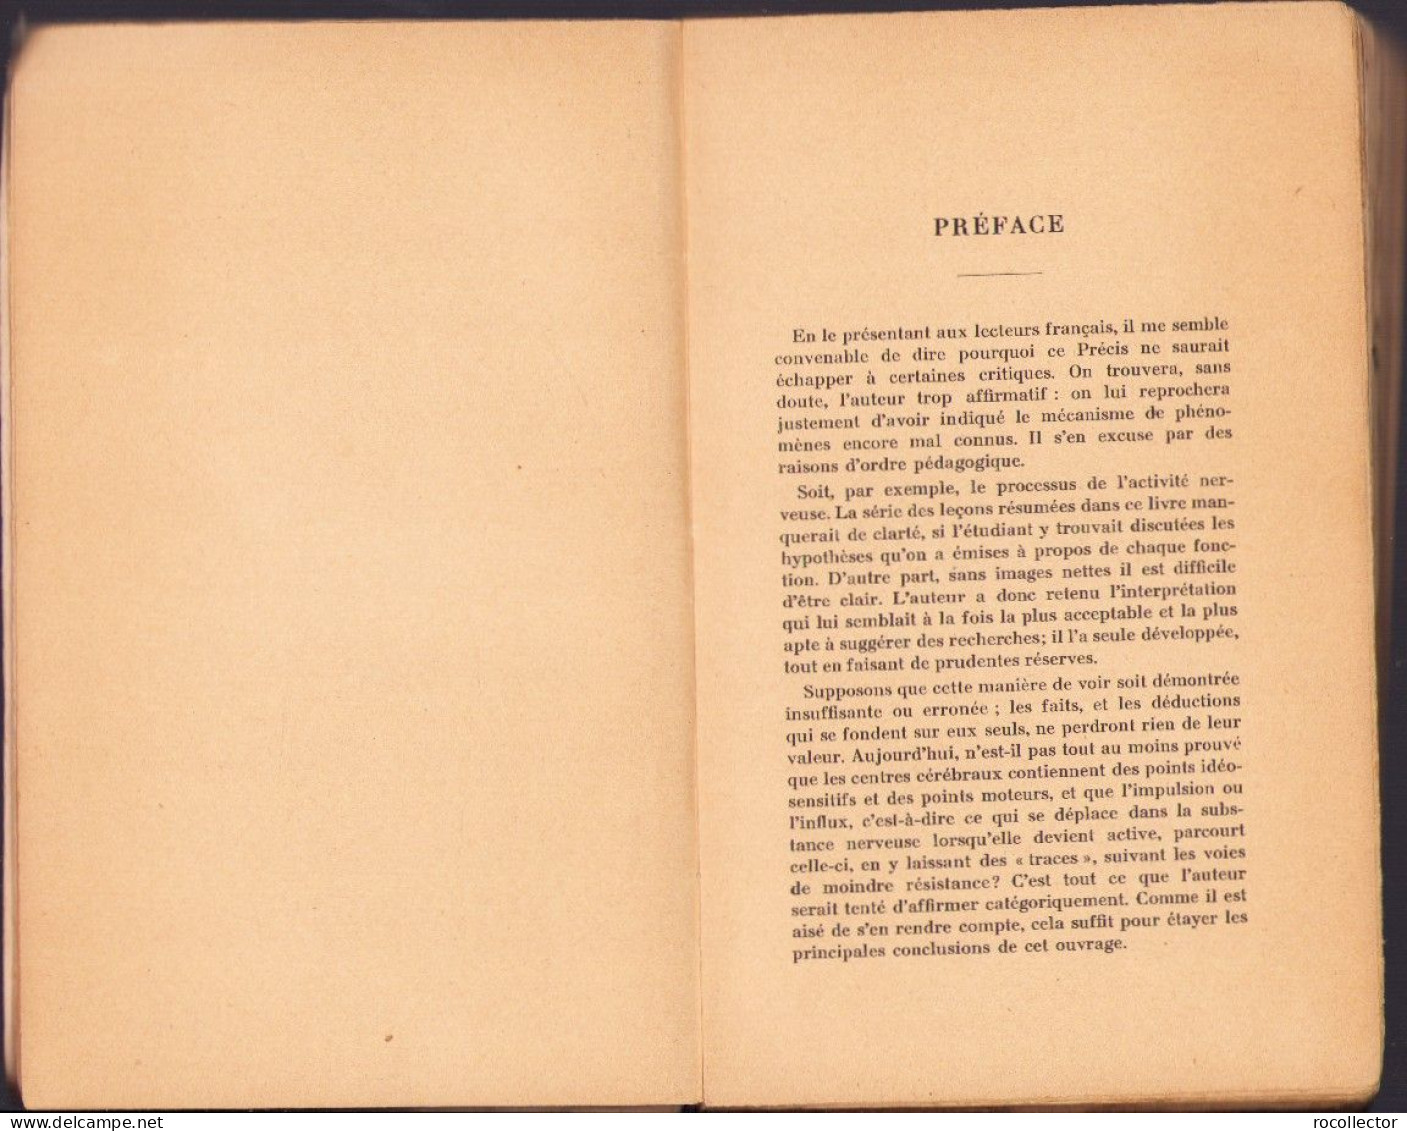 Precis De Psychologie Par Howard Warren 1923 C3865N - Livres Anciens